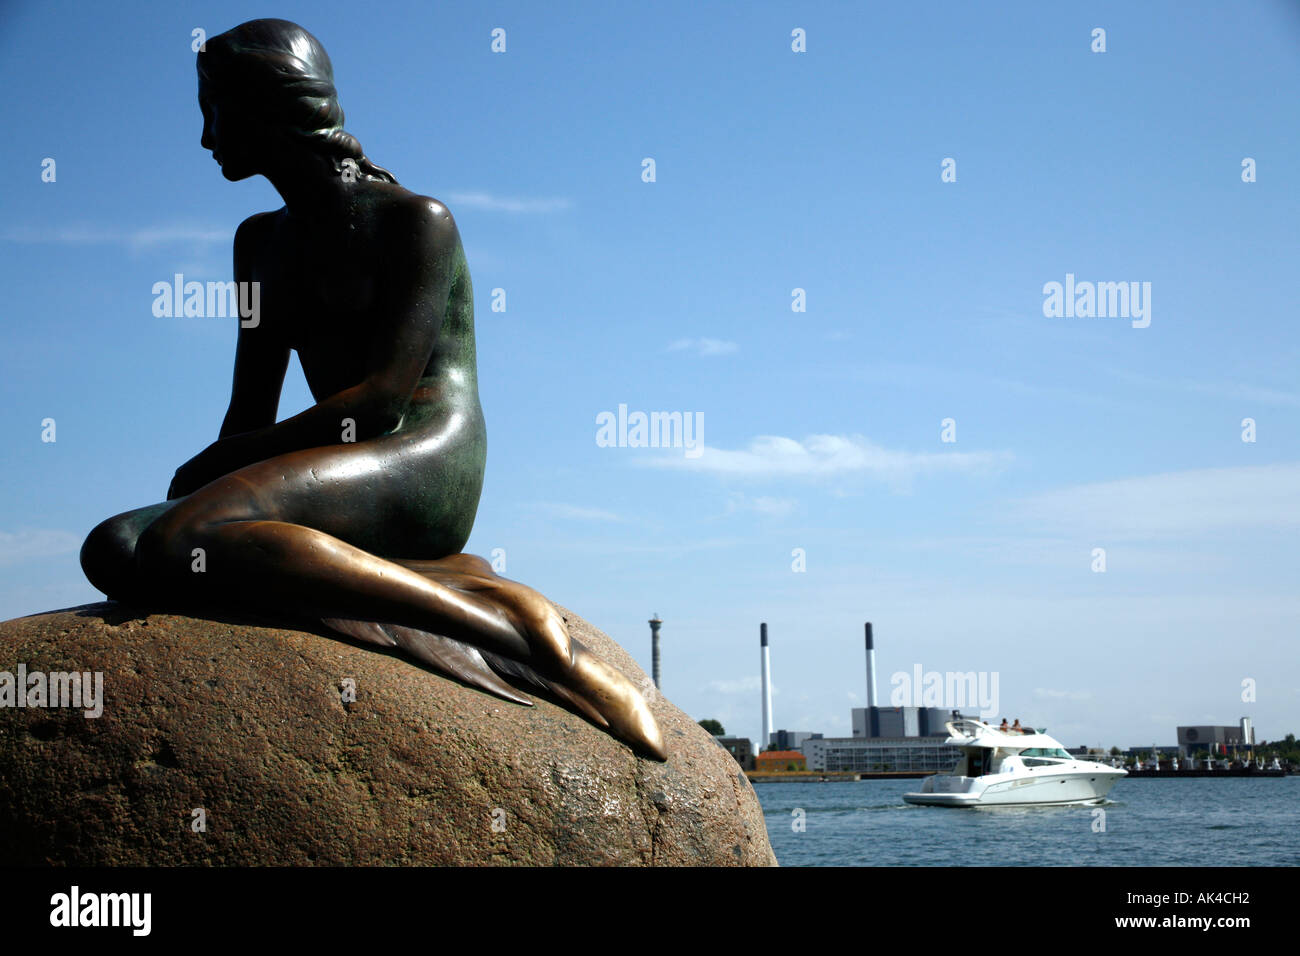 The Little Mermaid statue in Copenhagen, Denmark Stock Photo - Alamy